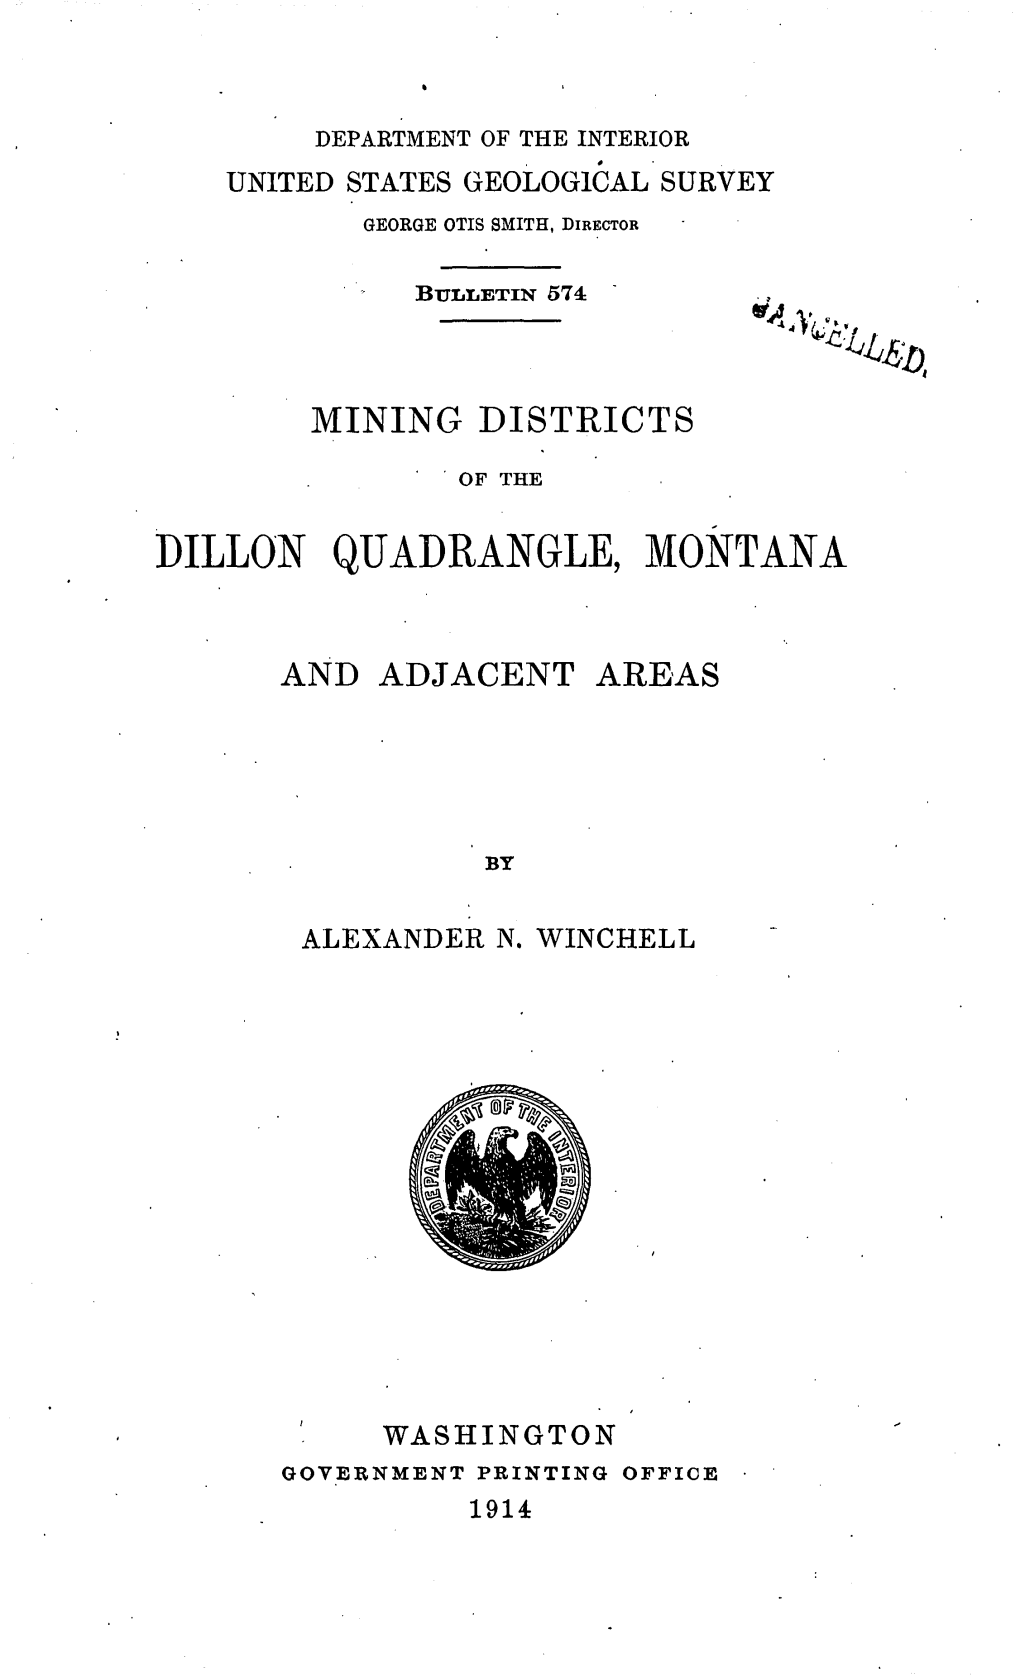 Dillon Quadrangle, Montana